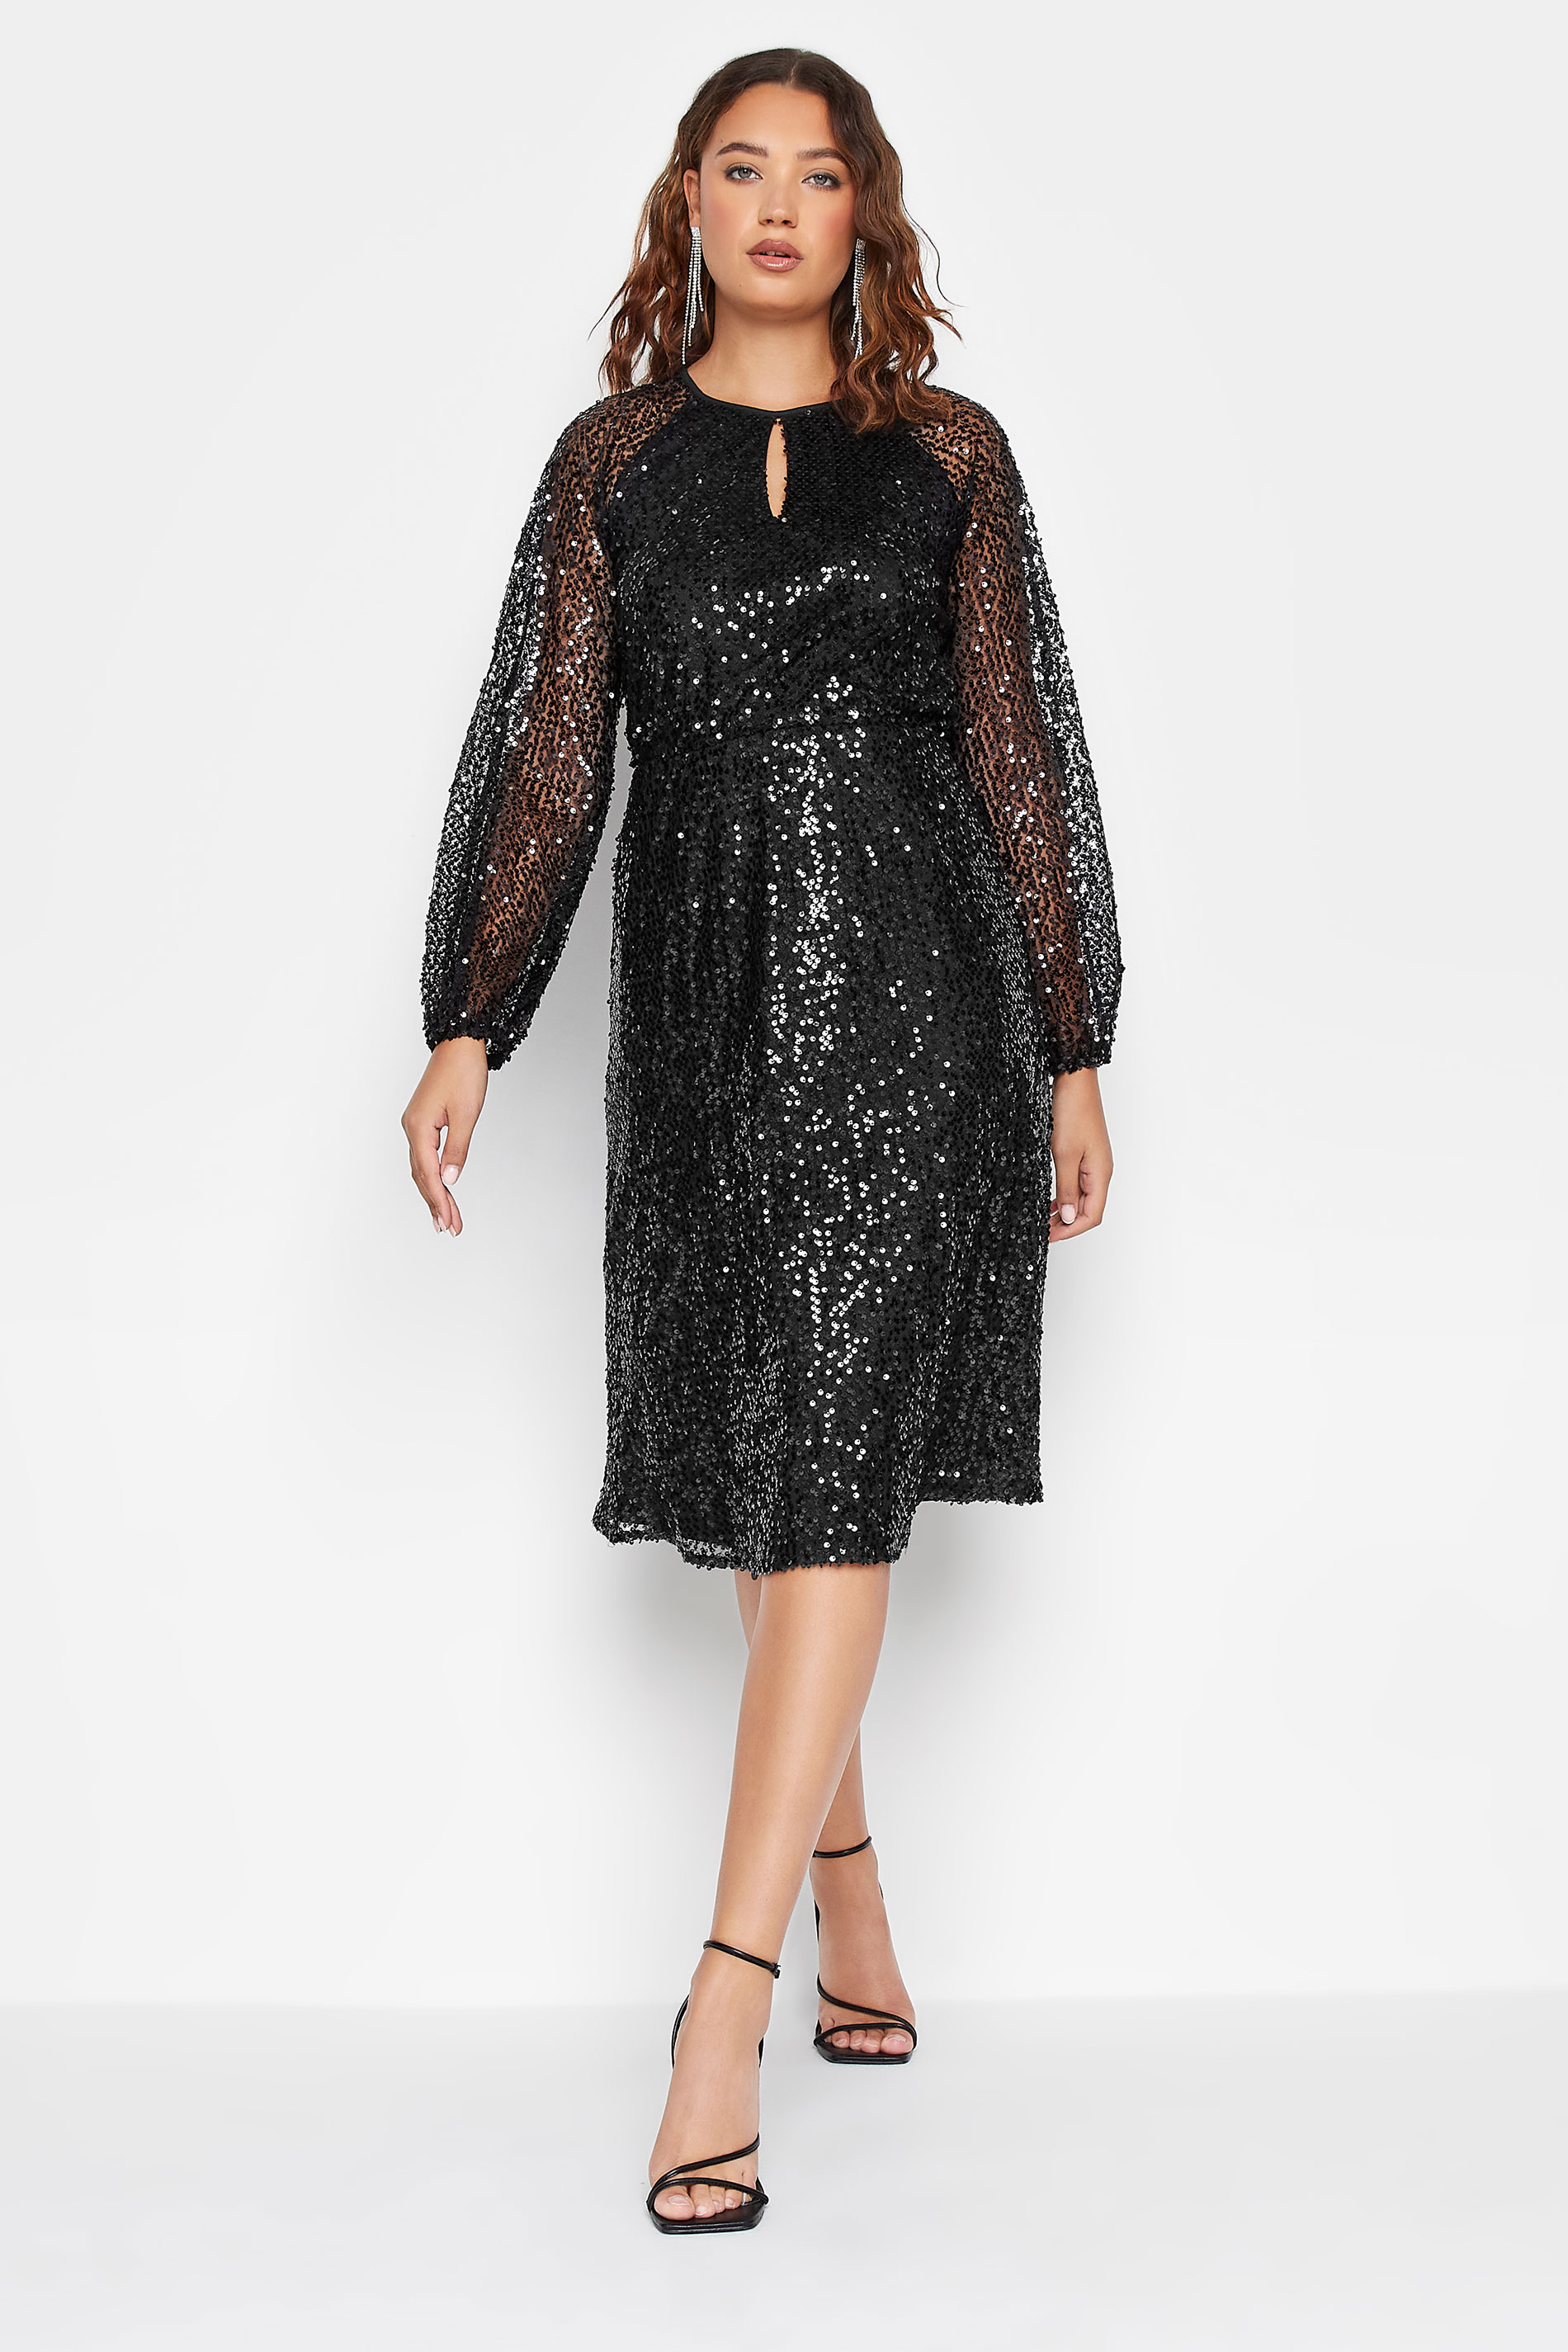 LTS Tall Black Sequin Embellished Keyhole Midi Dress | Long Tall Sally 2